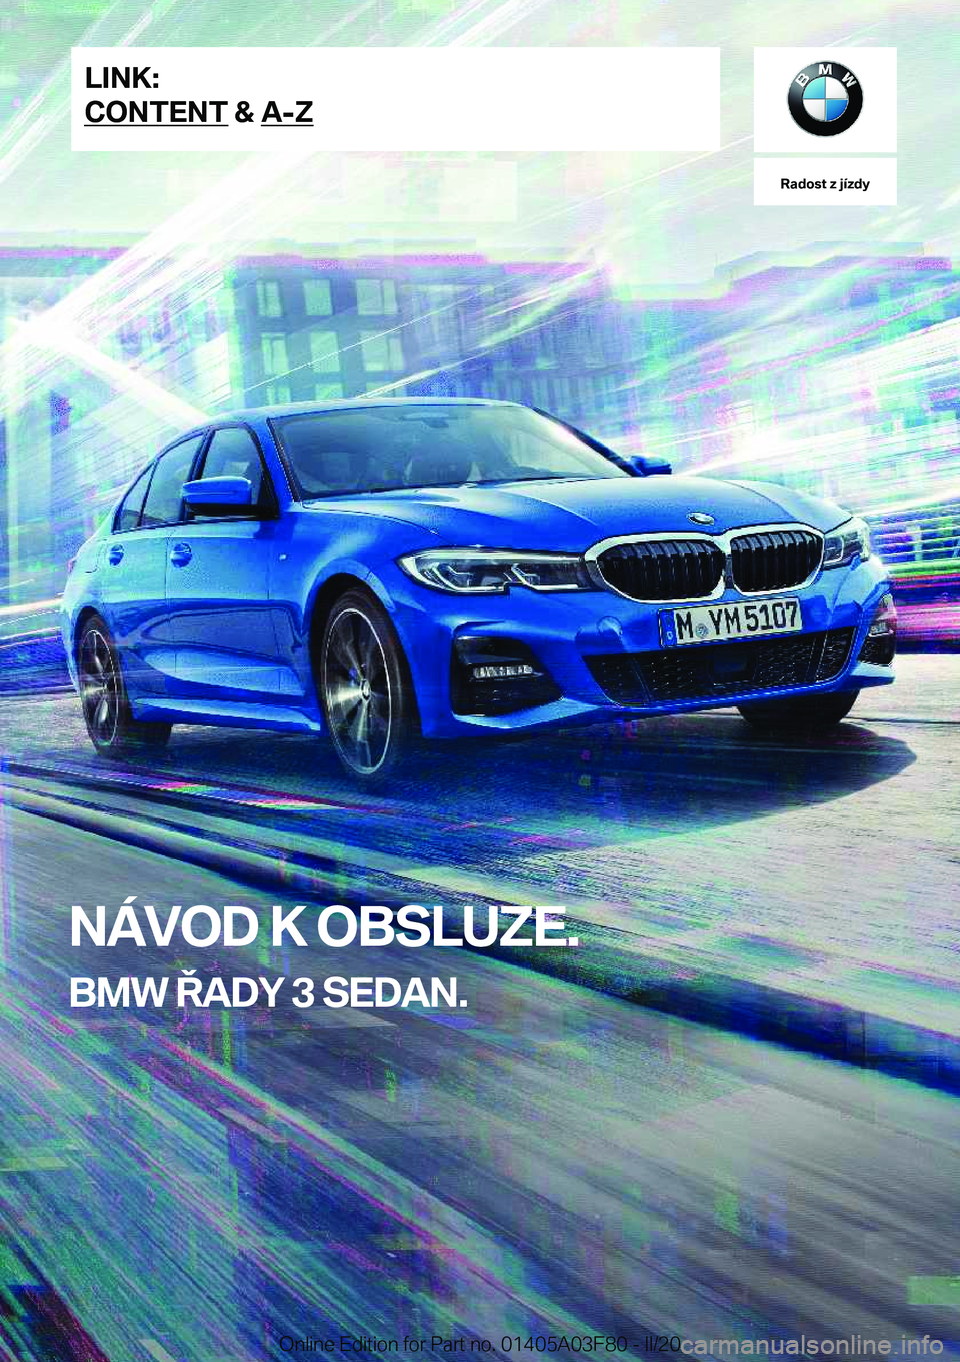 BMW 3 SERIES 2020  Návod na použití (in Czech) �R�a�d�o�s�t��z��j�